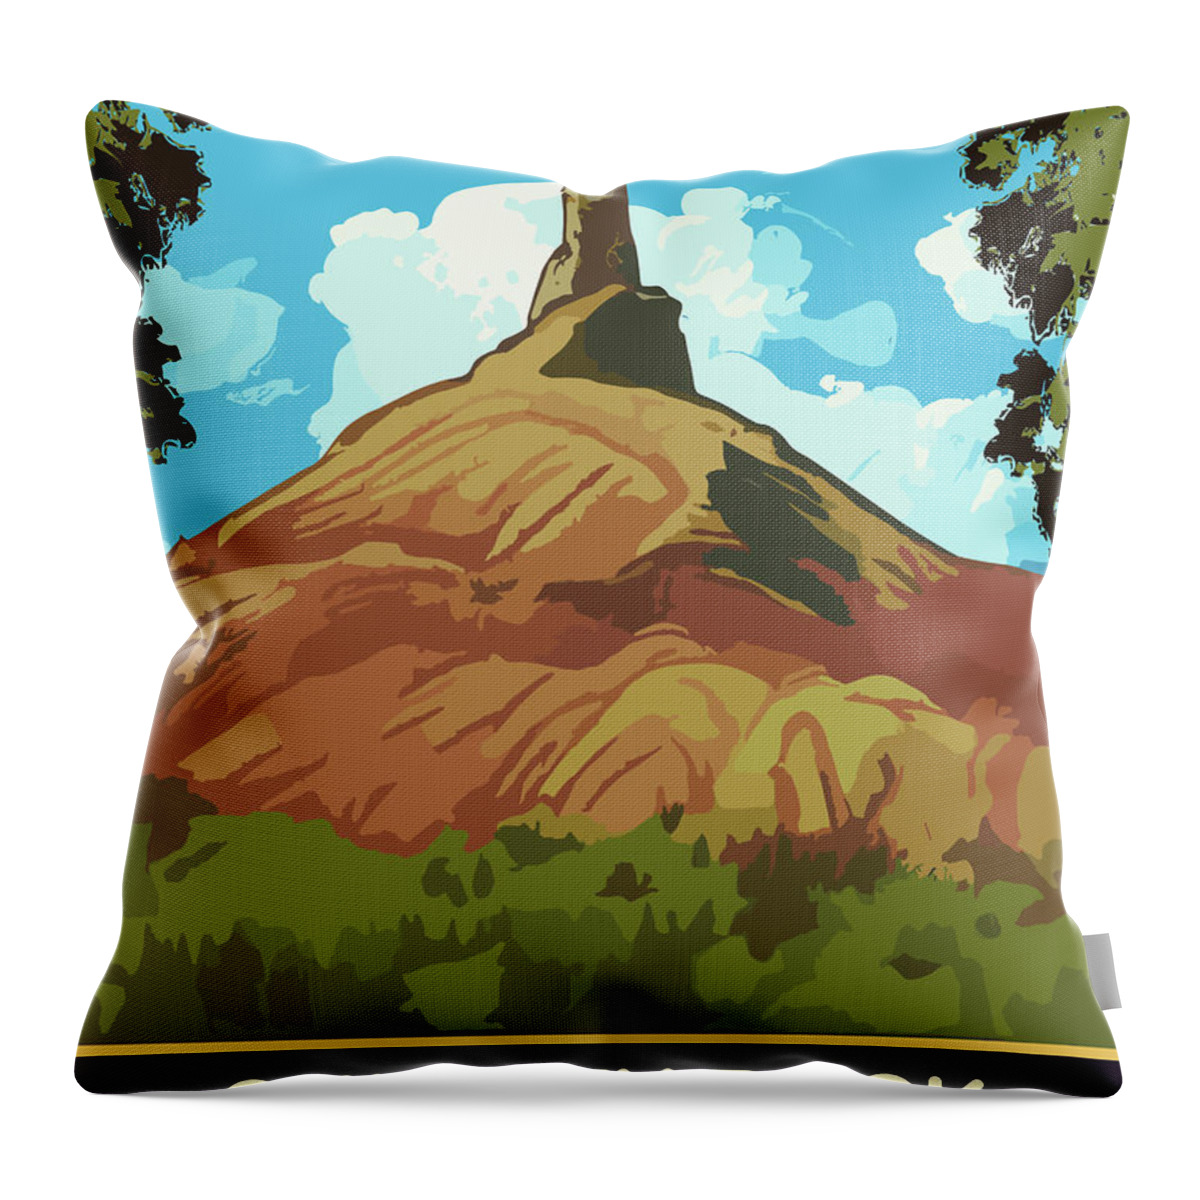 Chimney Rock Throw Pillow featuring the digital art Chimney Rock, Nebraska by Long Shot